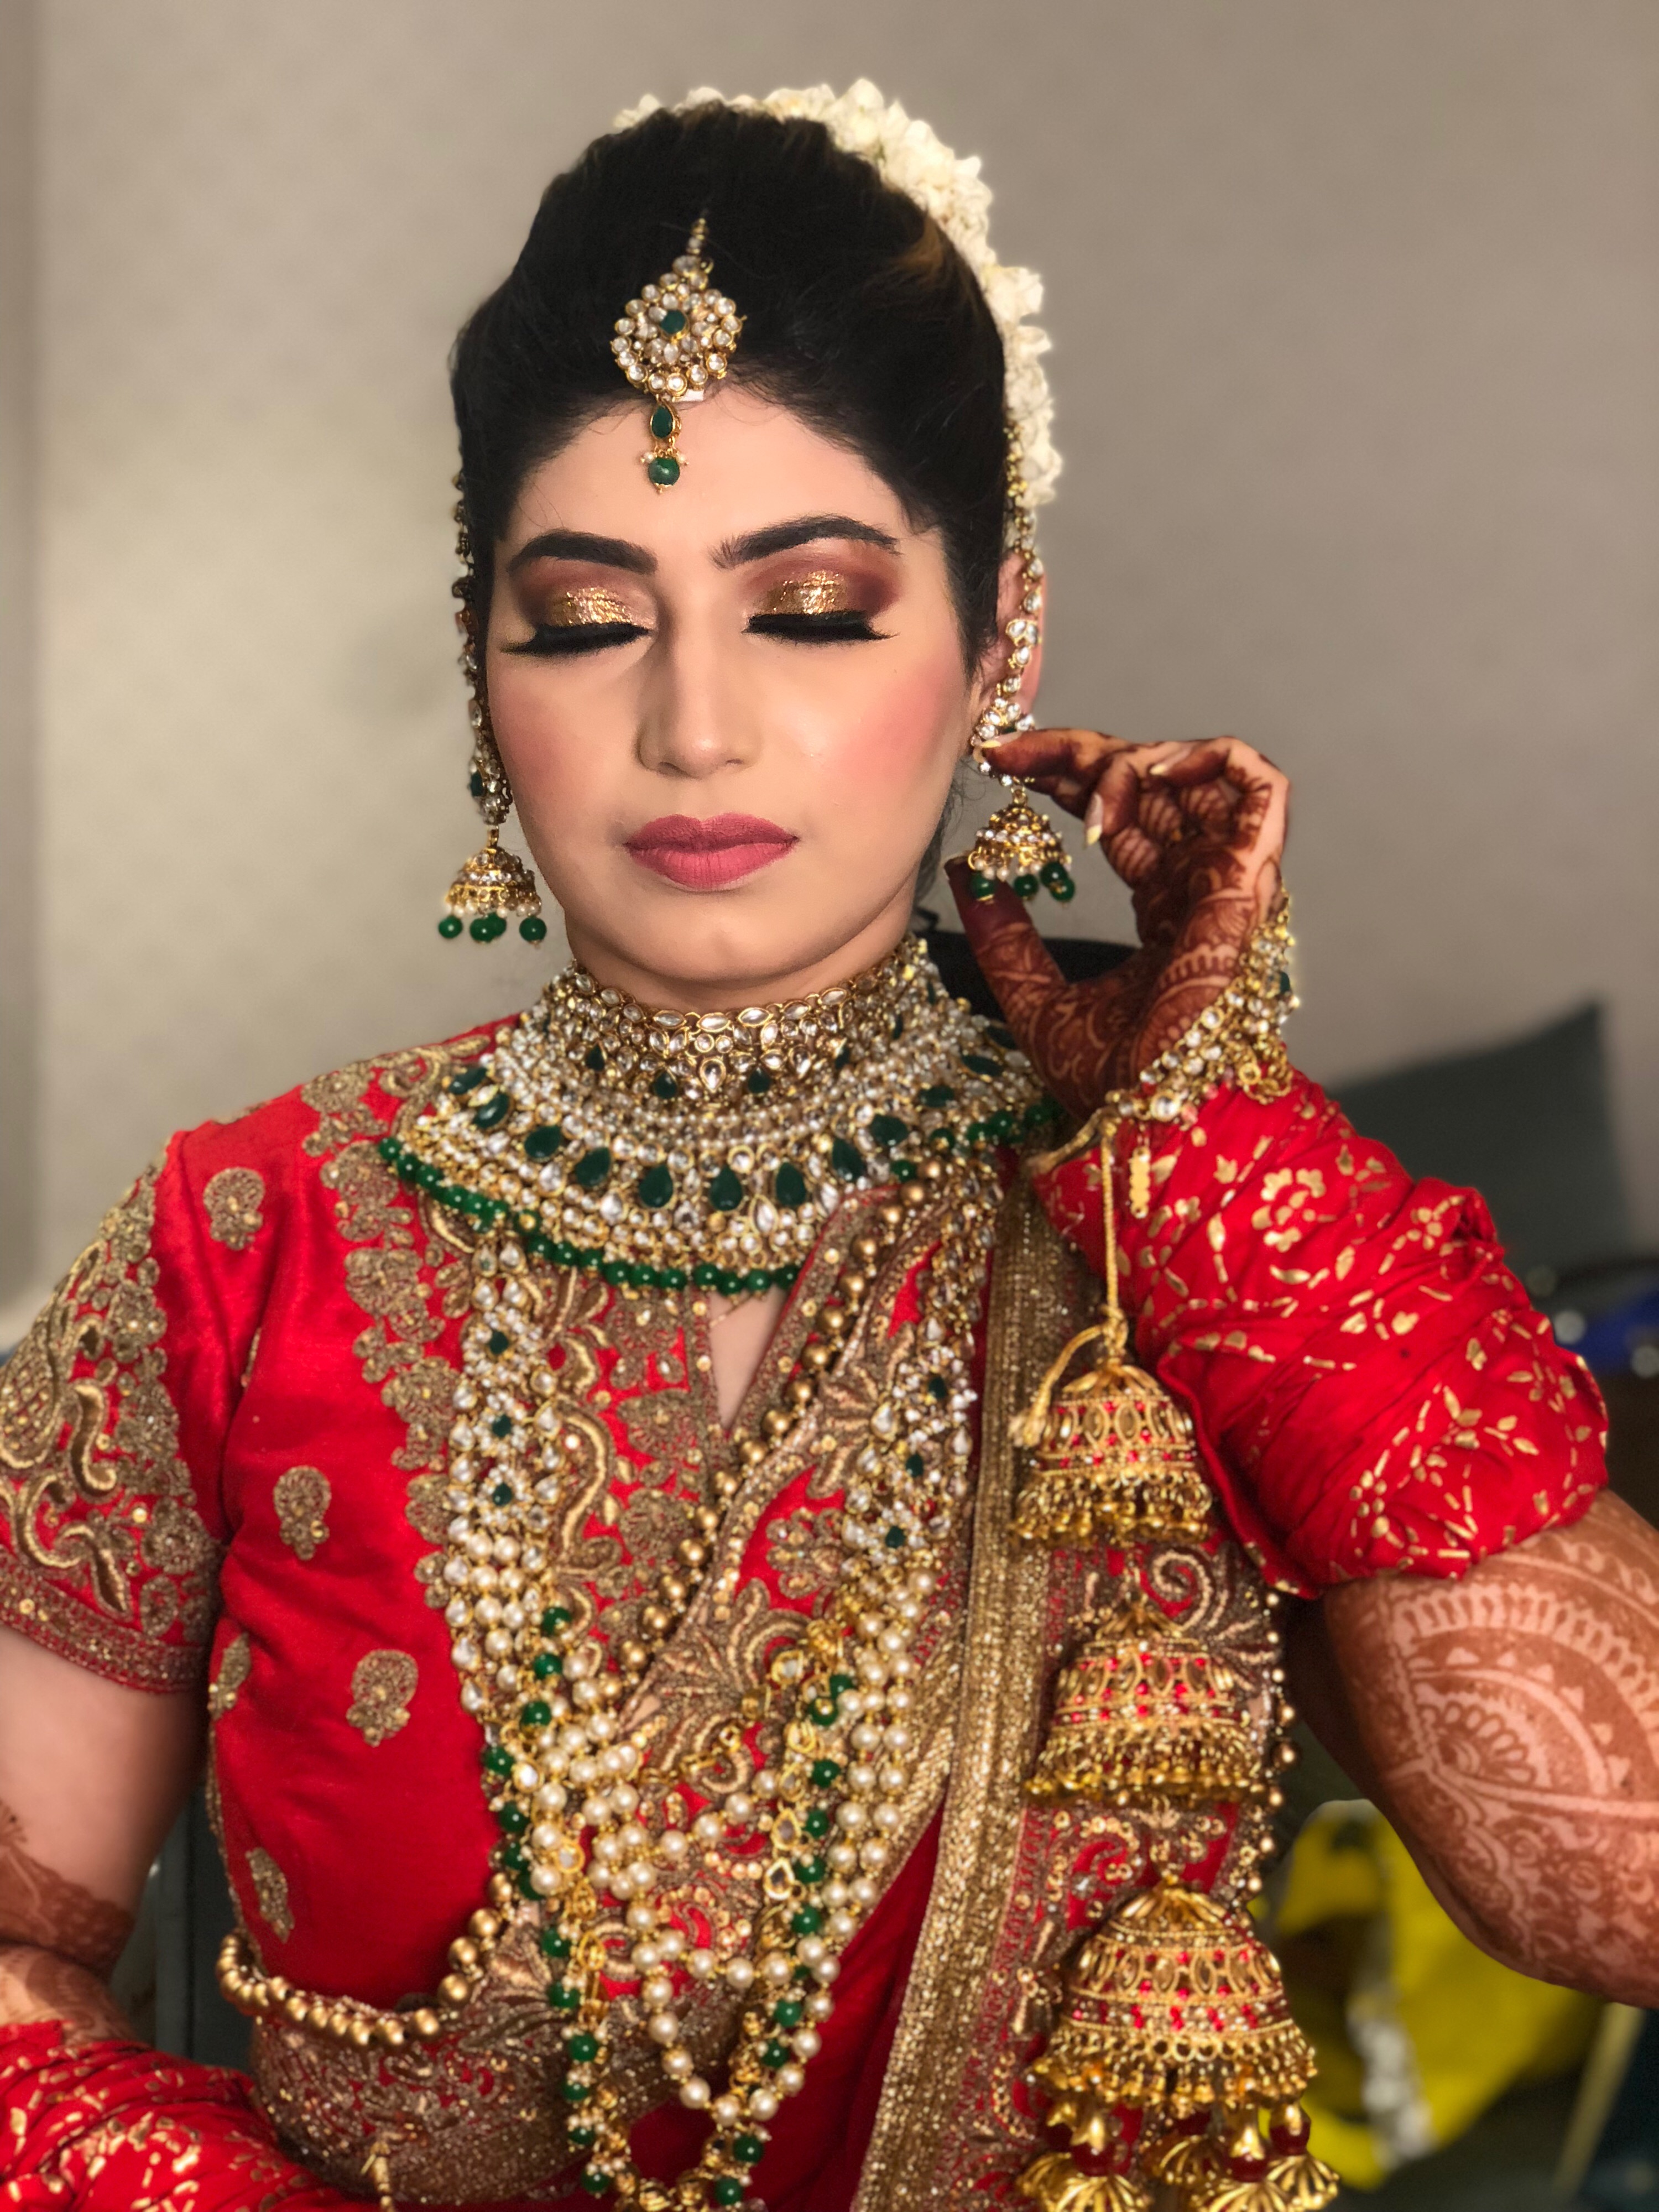 rashmeet-kaur-makeovers-makeup-artist-delhi-ncr